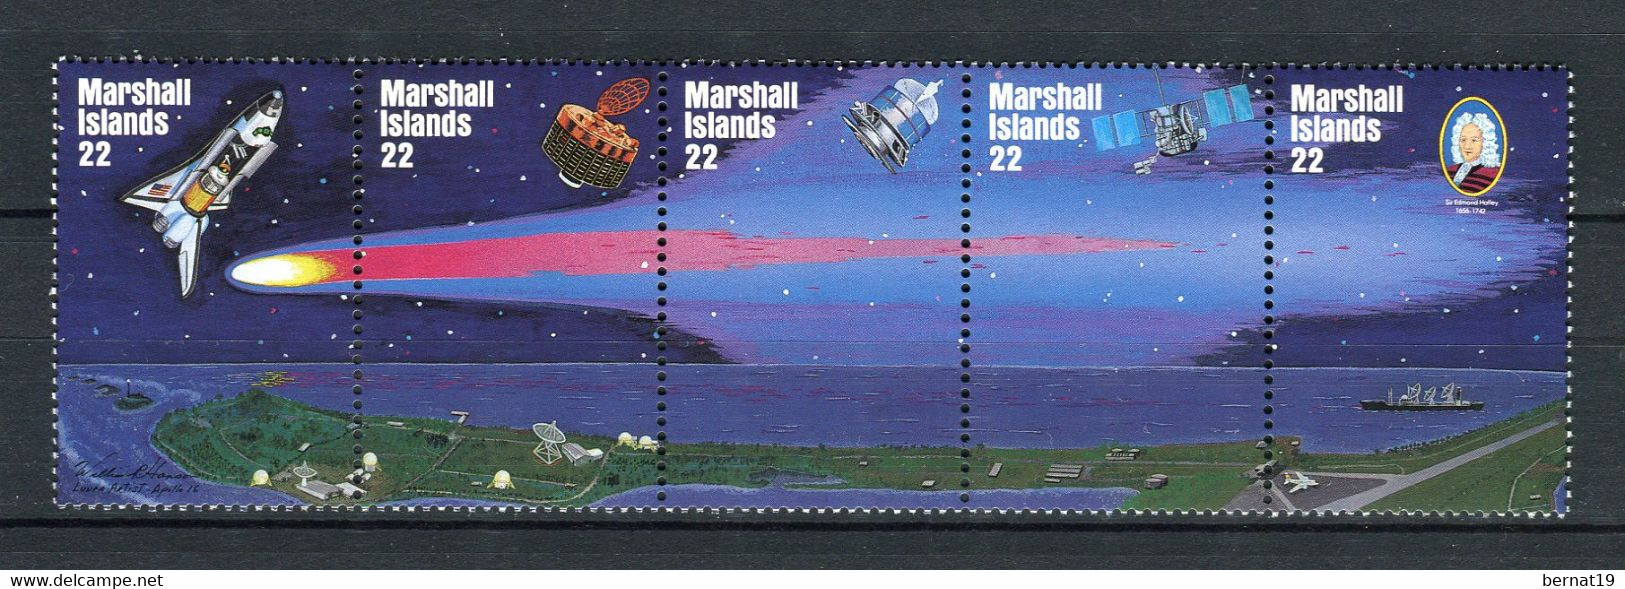 Marshall Islands 1985. Yvert 100-04 ** MNH. - Marshall